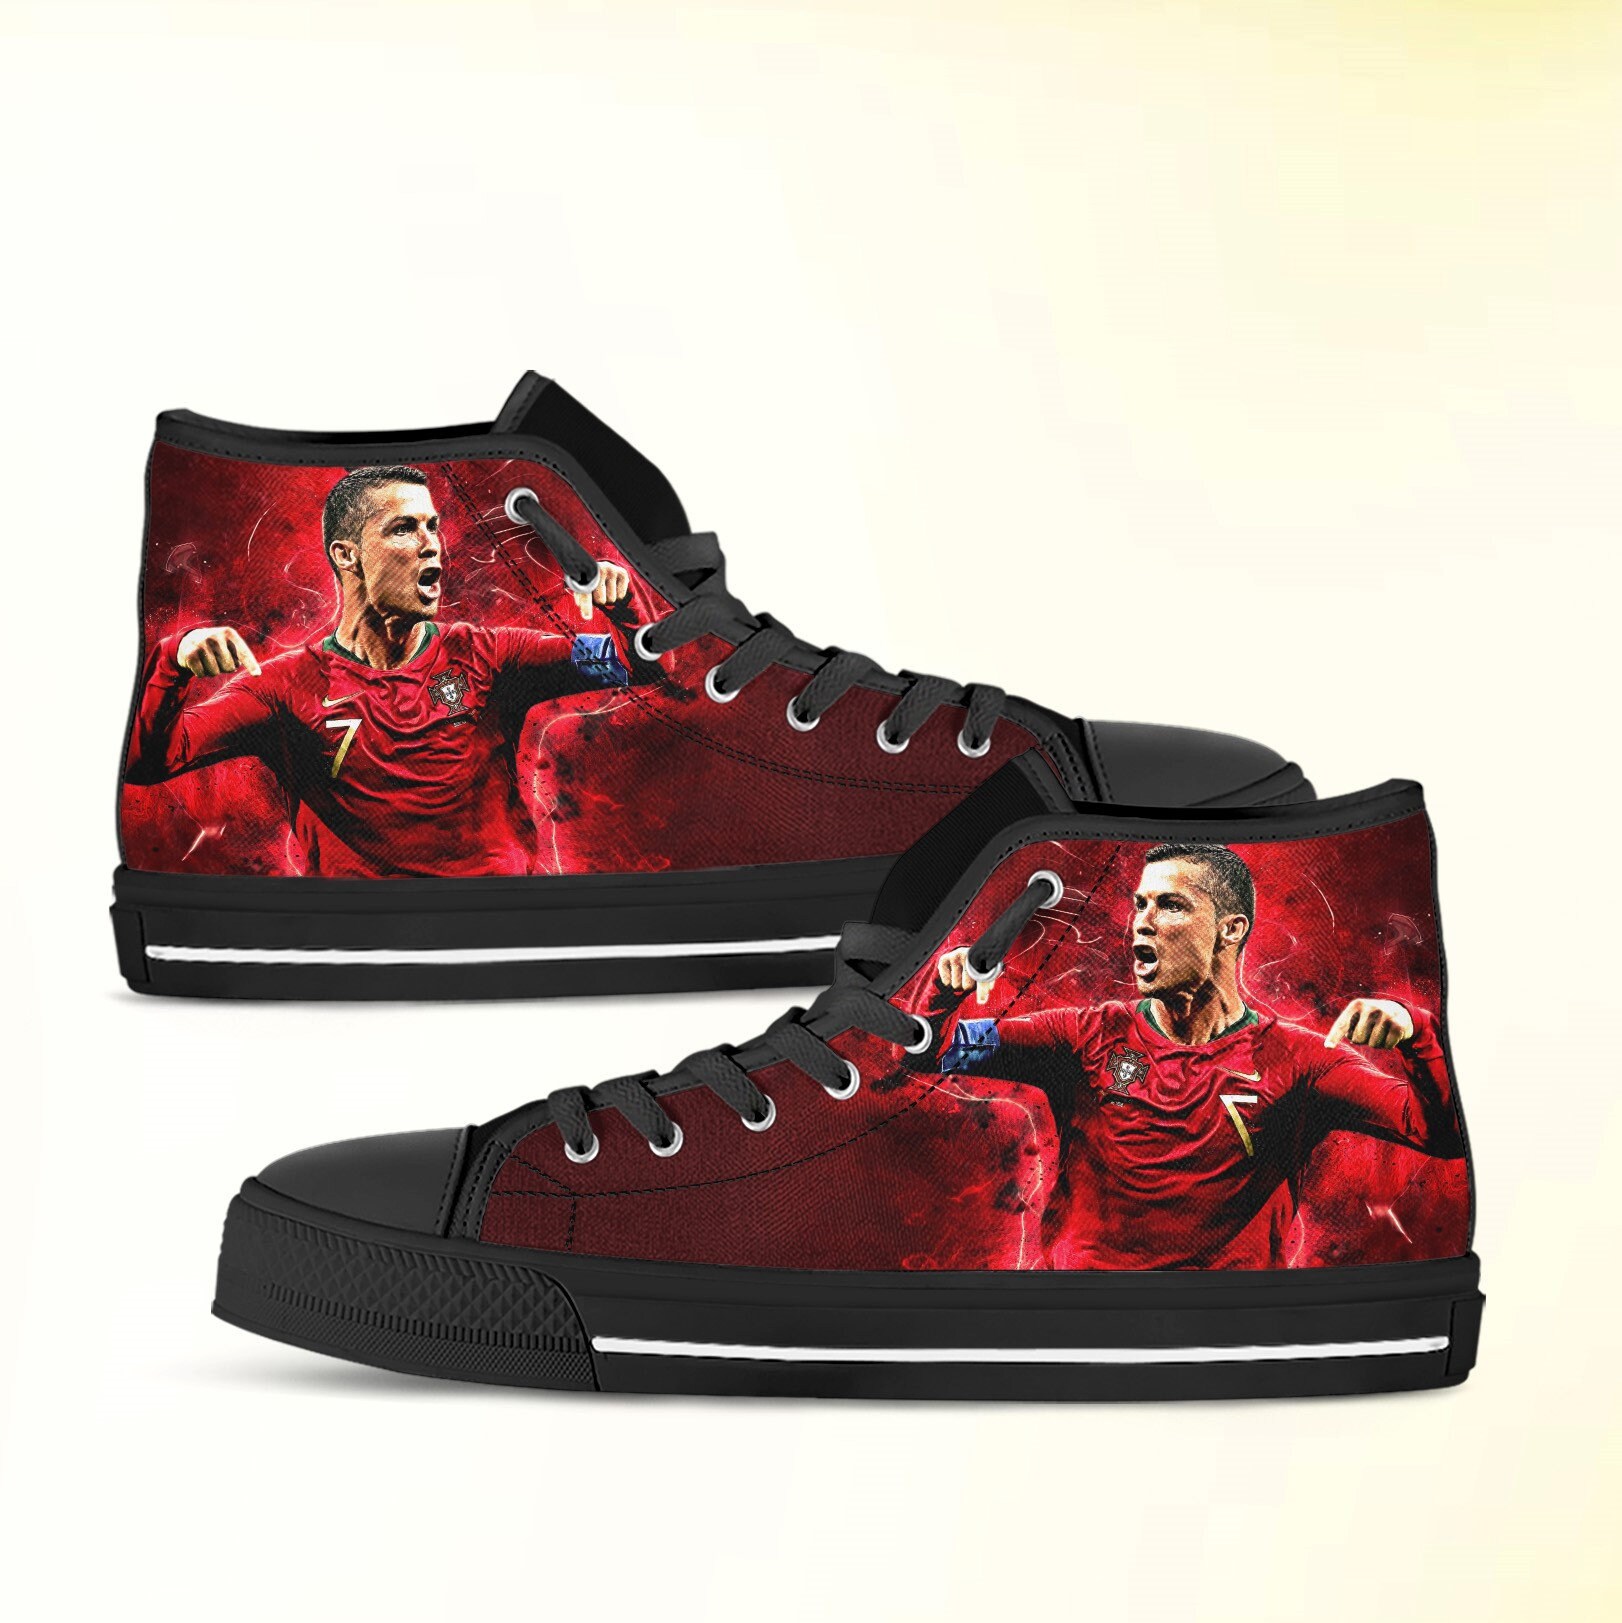 Ronaldo Shoes Etsy